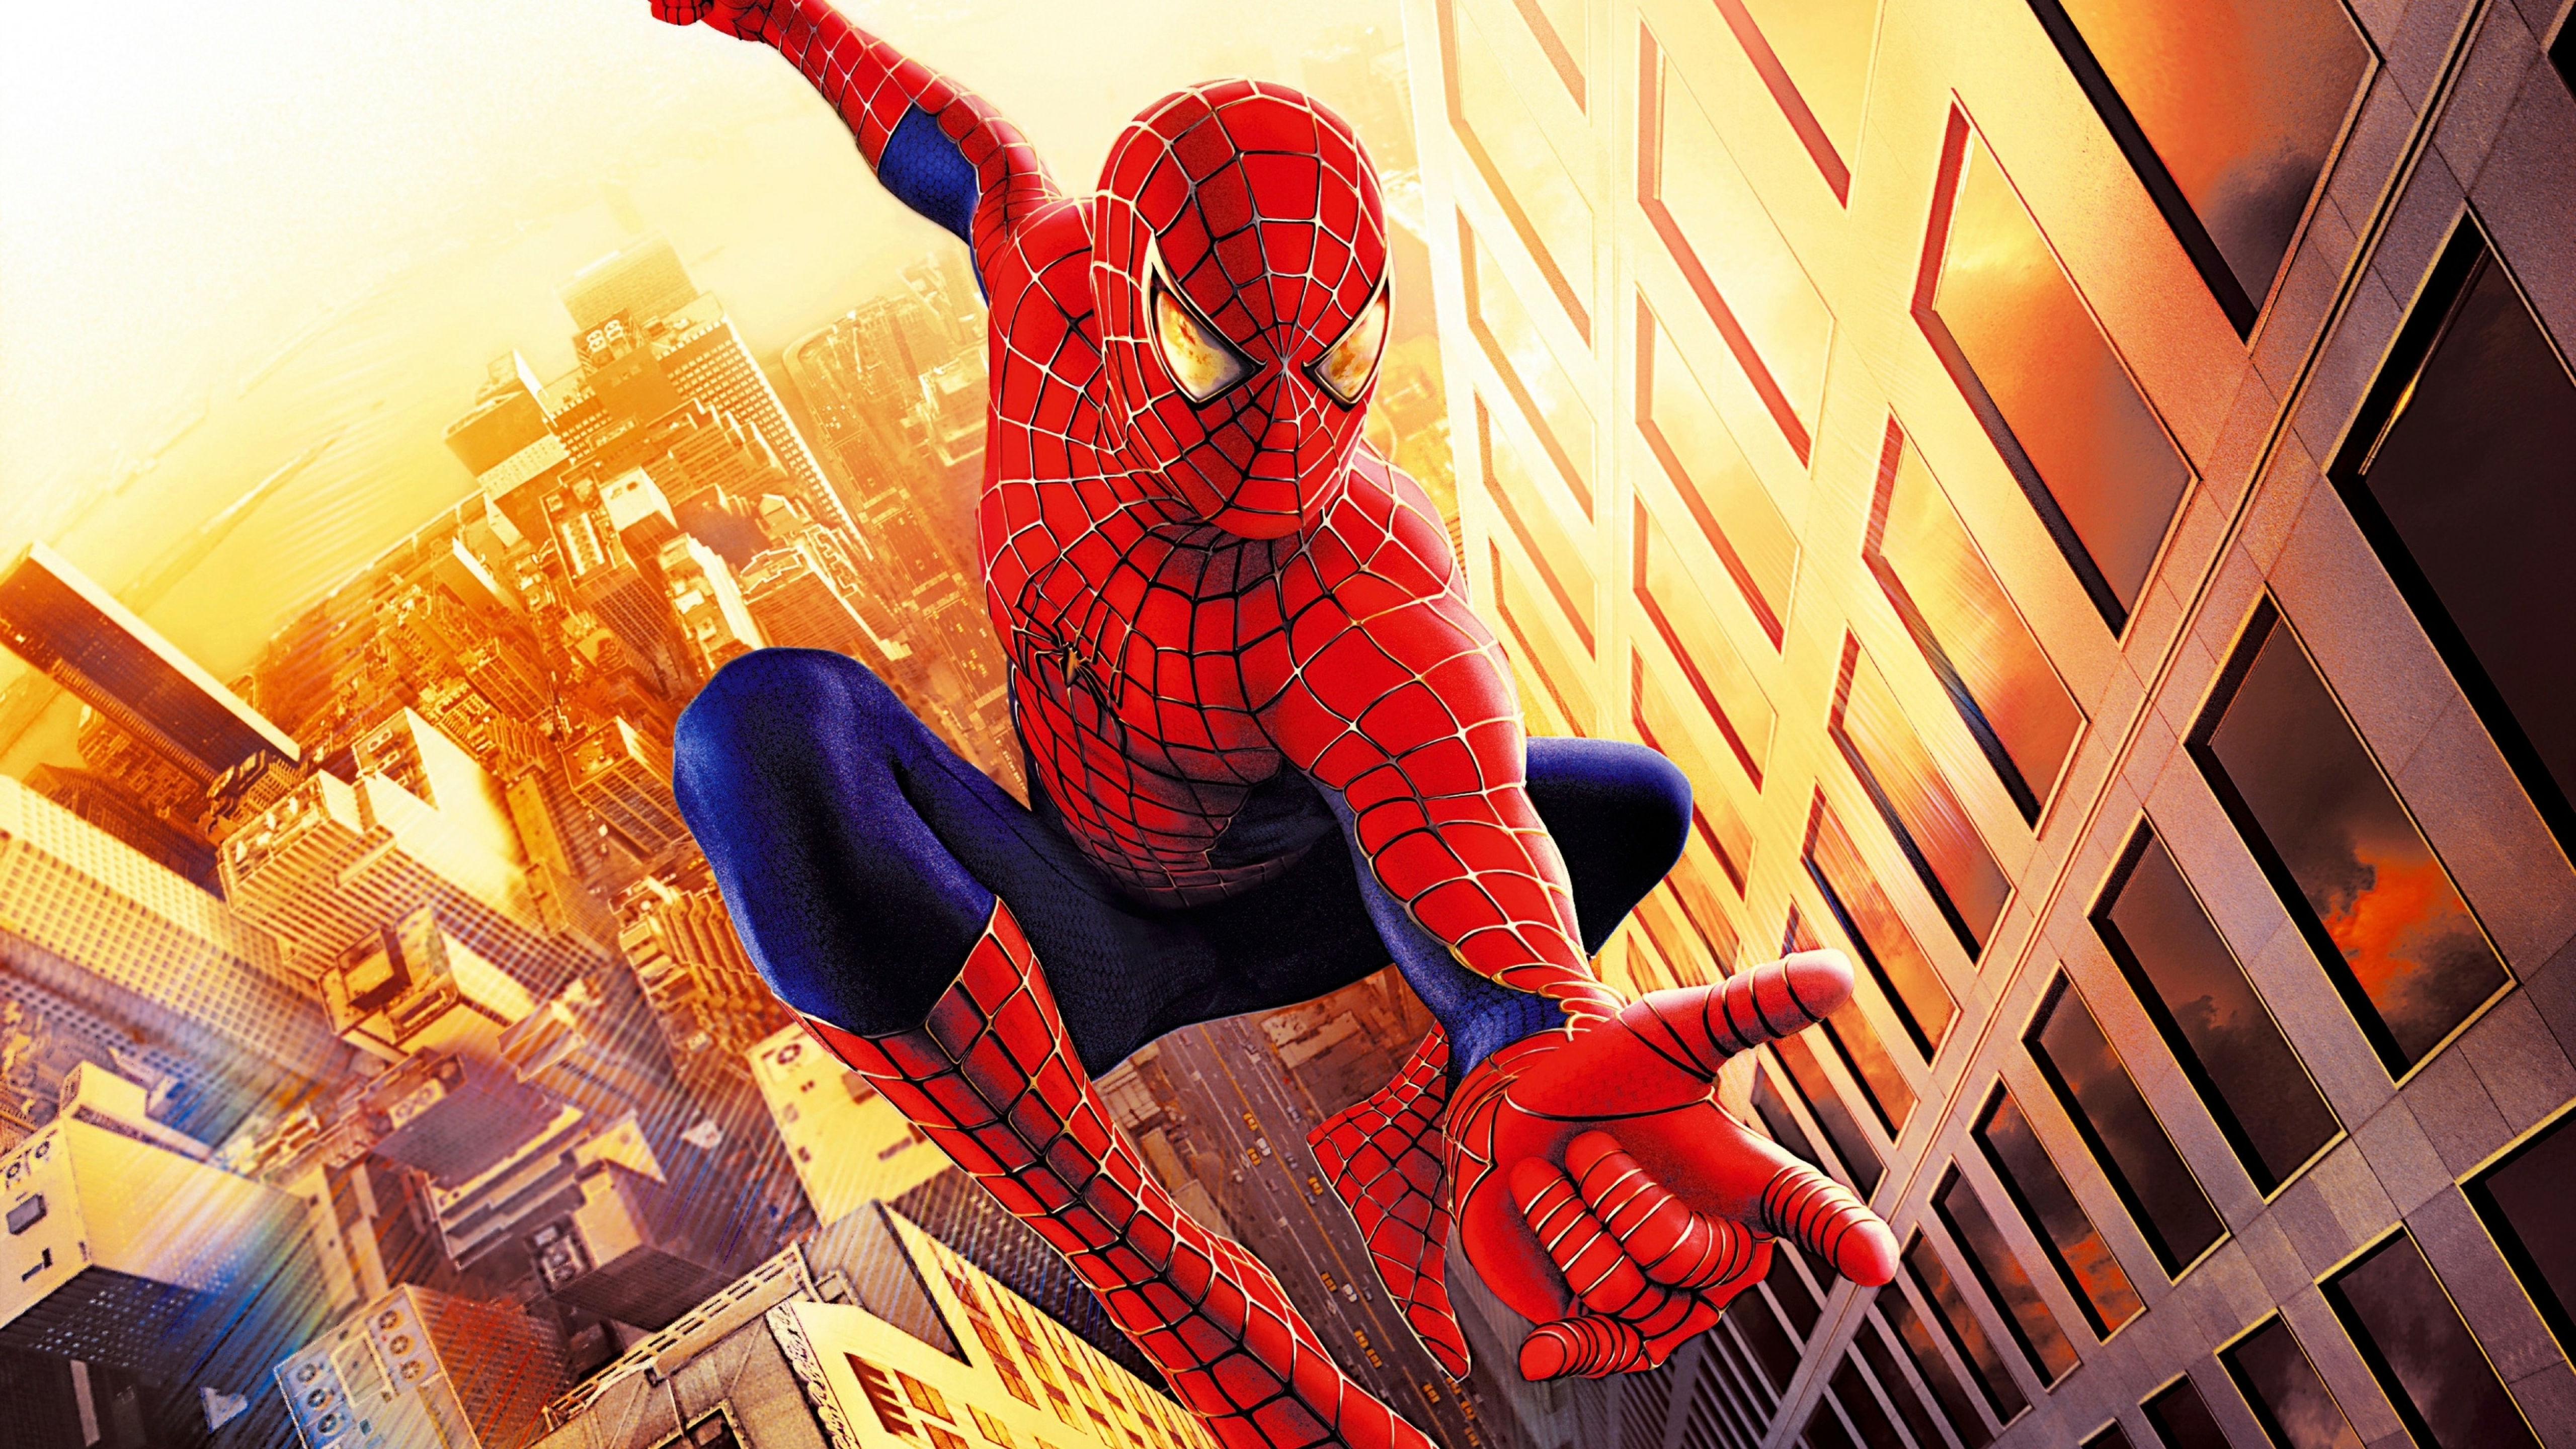 5120x2880 Spider-Man 4k Digital Art 2021 5K Wallpaper, HD Superheroes 4K  Wallpapers, Images, Photos and Background - Wallpapers Den